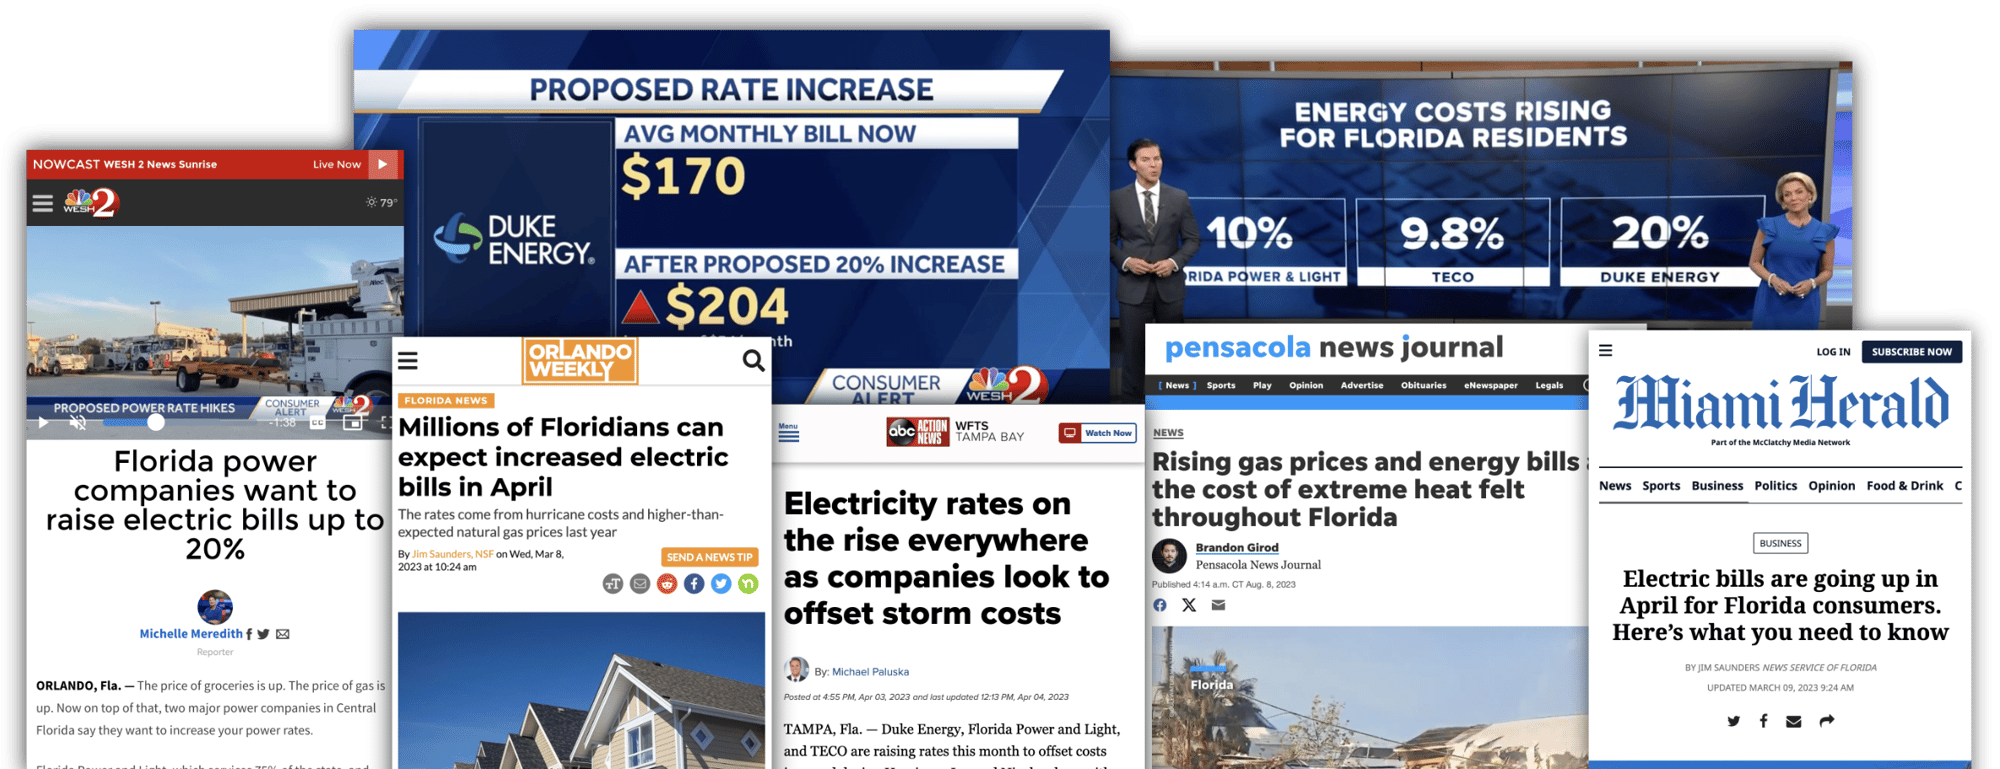 Energy bills increasing constantly in Florida